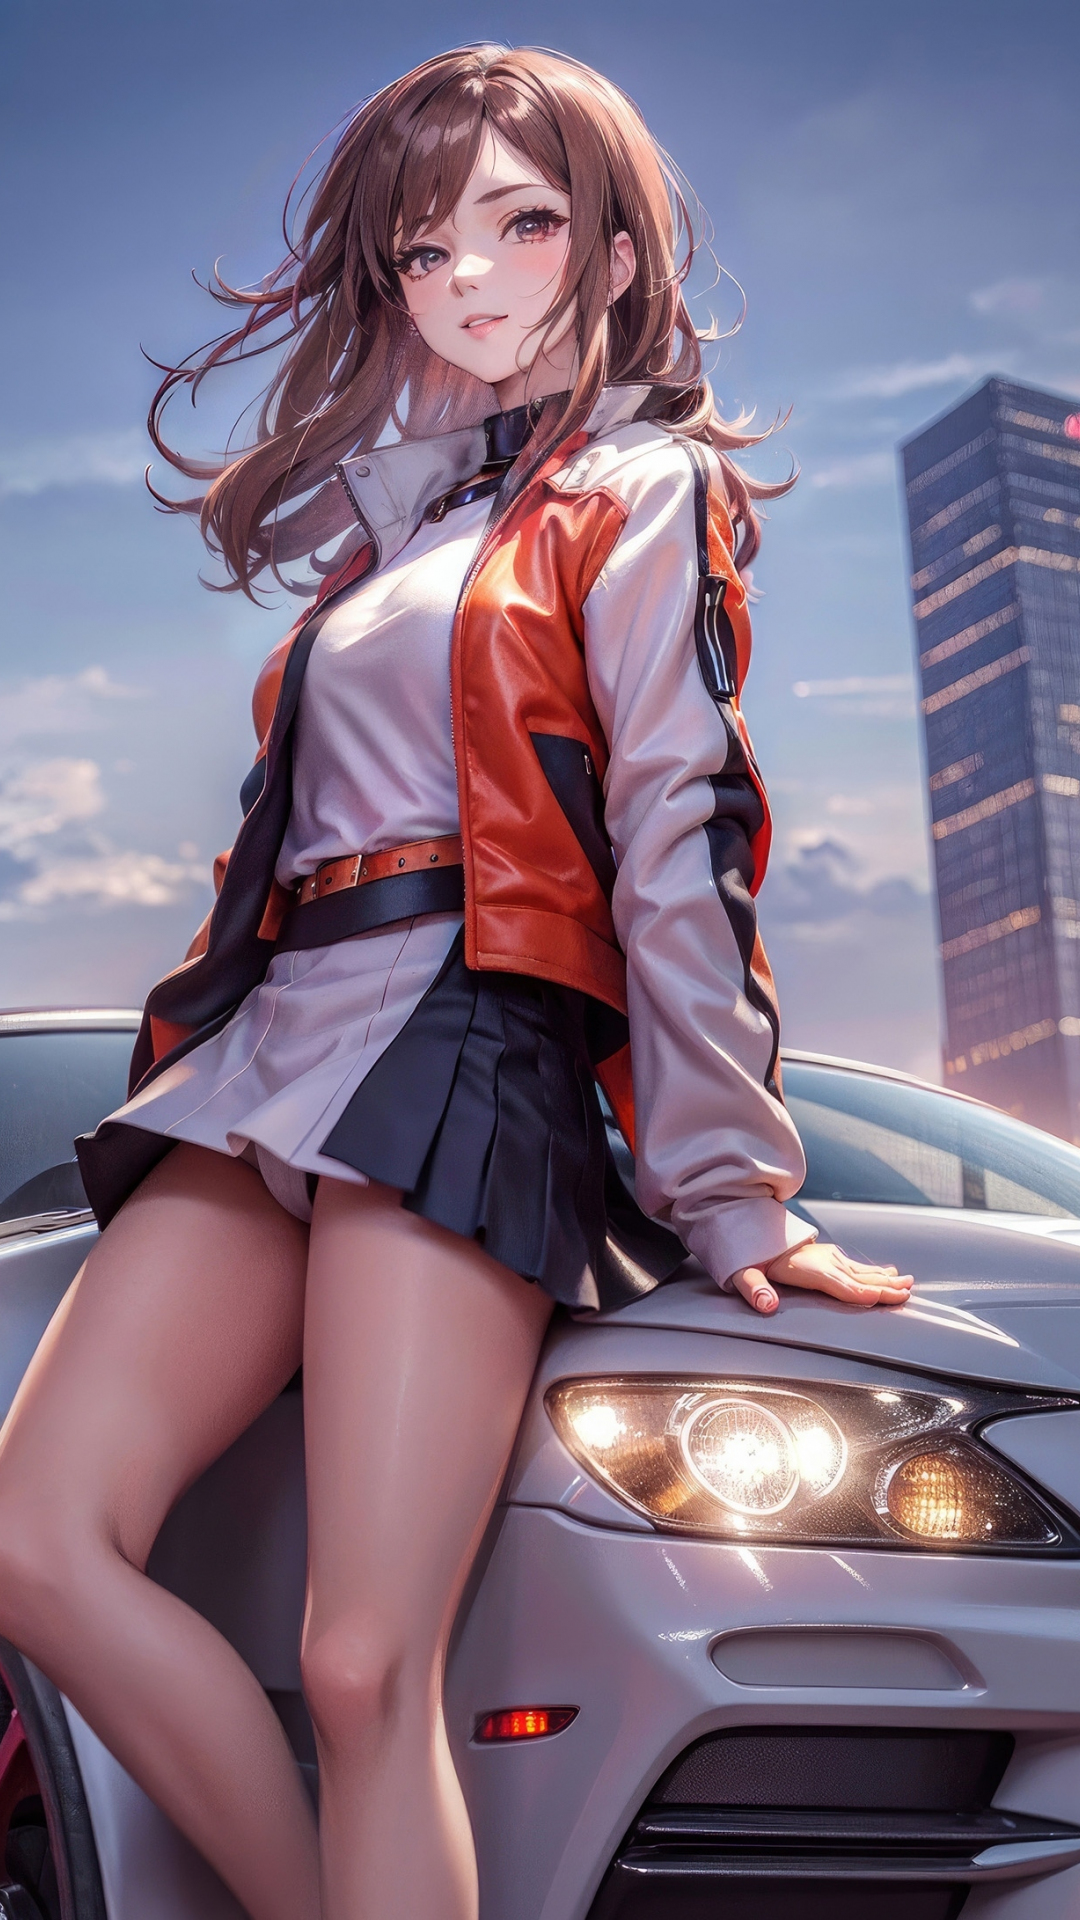 Anime girl with a car, beautiful, art, 1080x1920 wallpaper